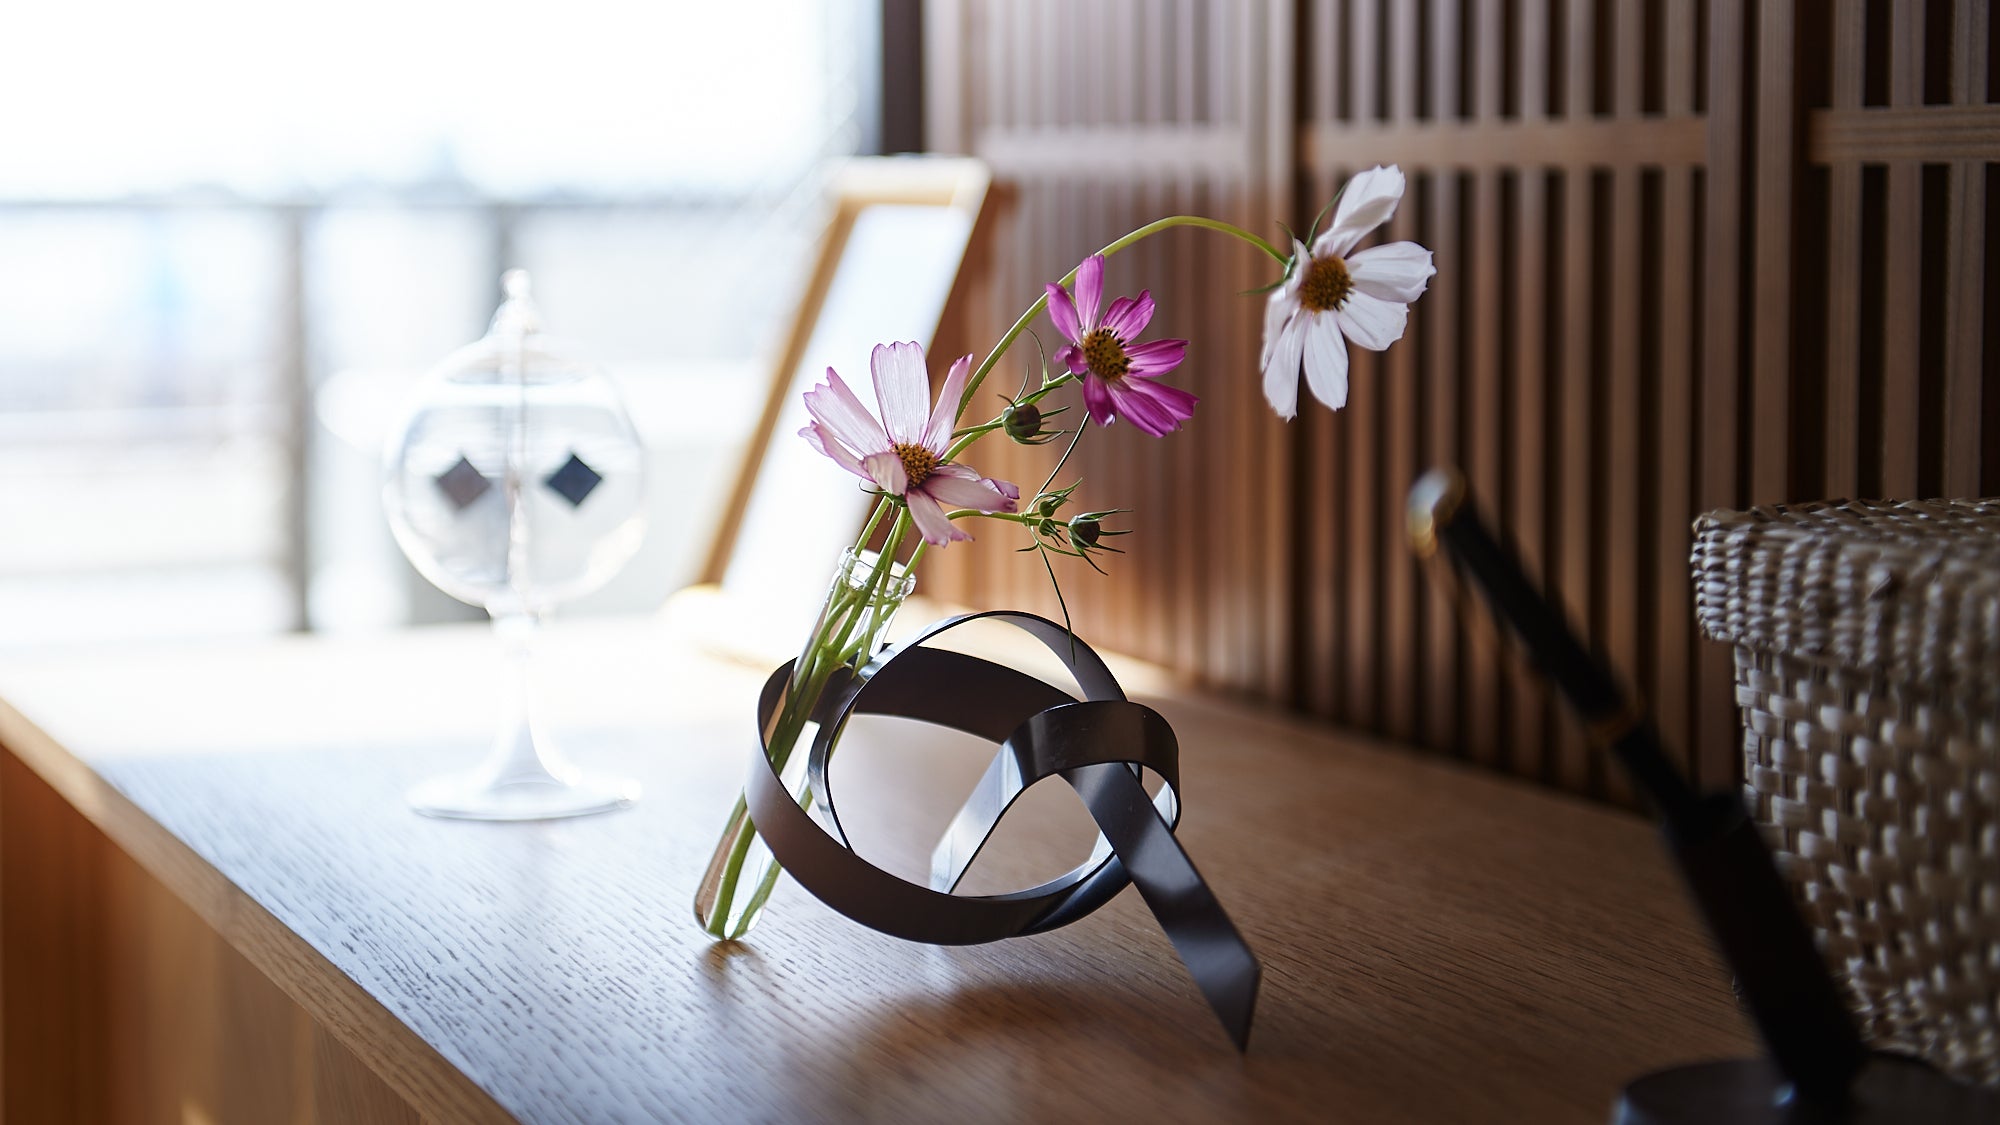 Markable Creative Home Modern Style Japanese Vase